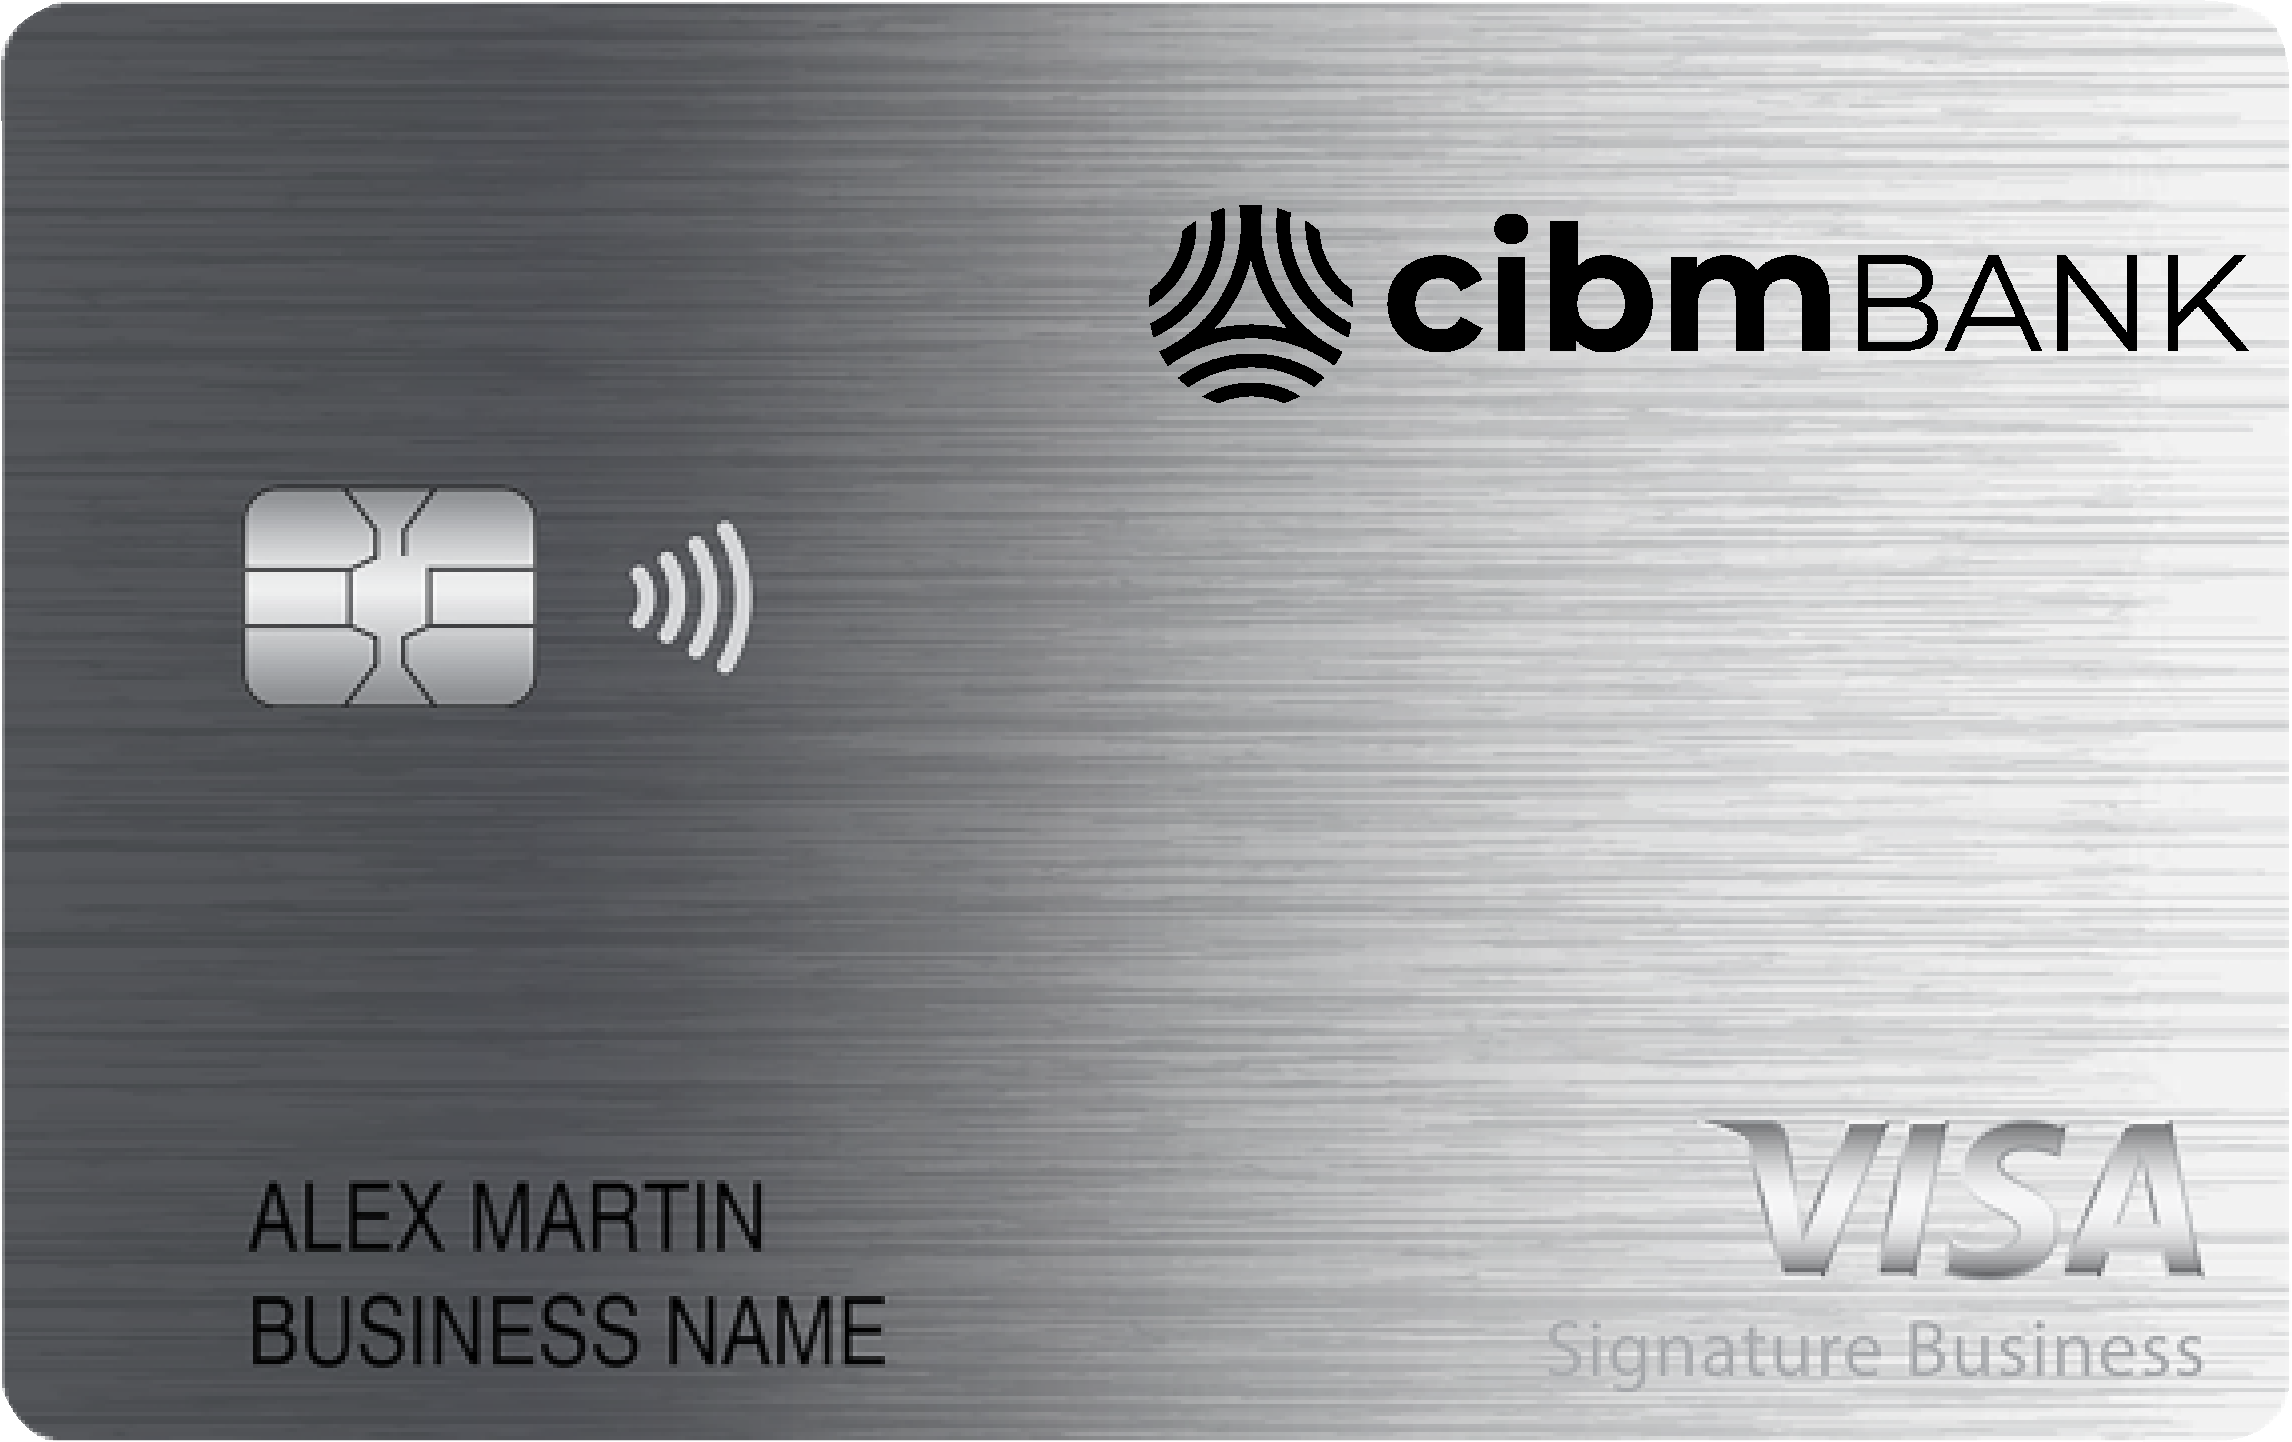 CIBM Bank Smart Business Rewards Card